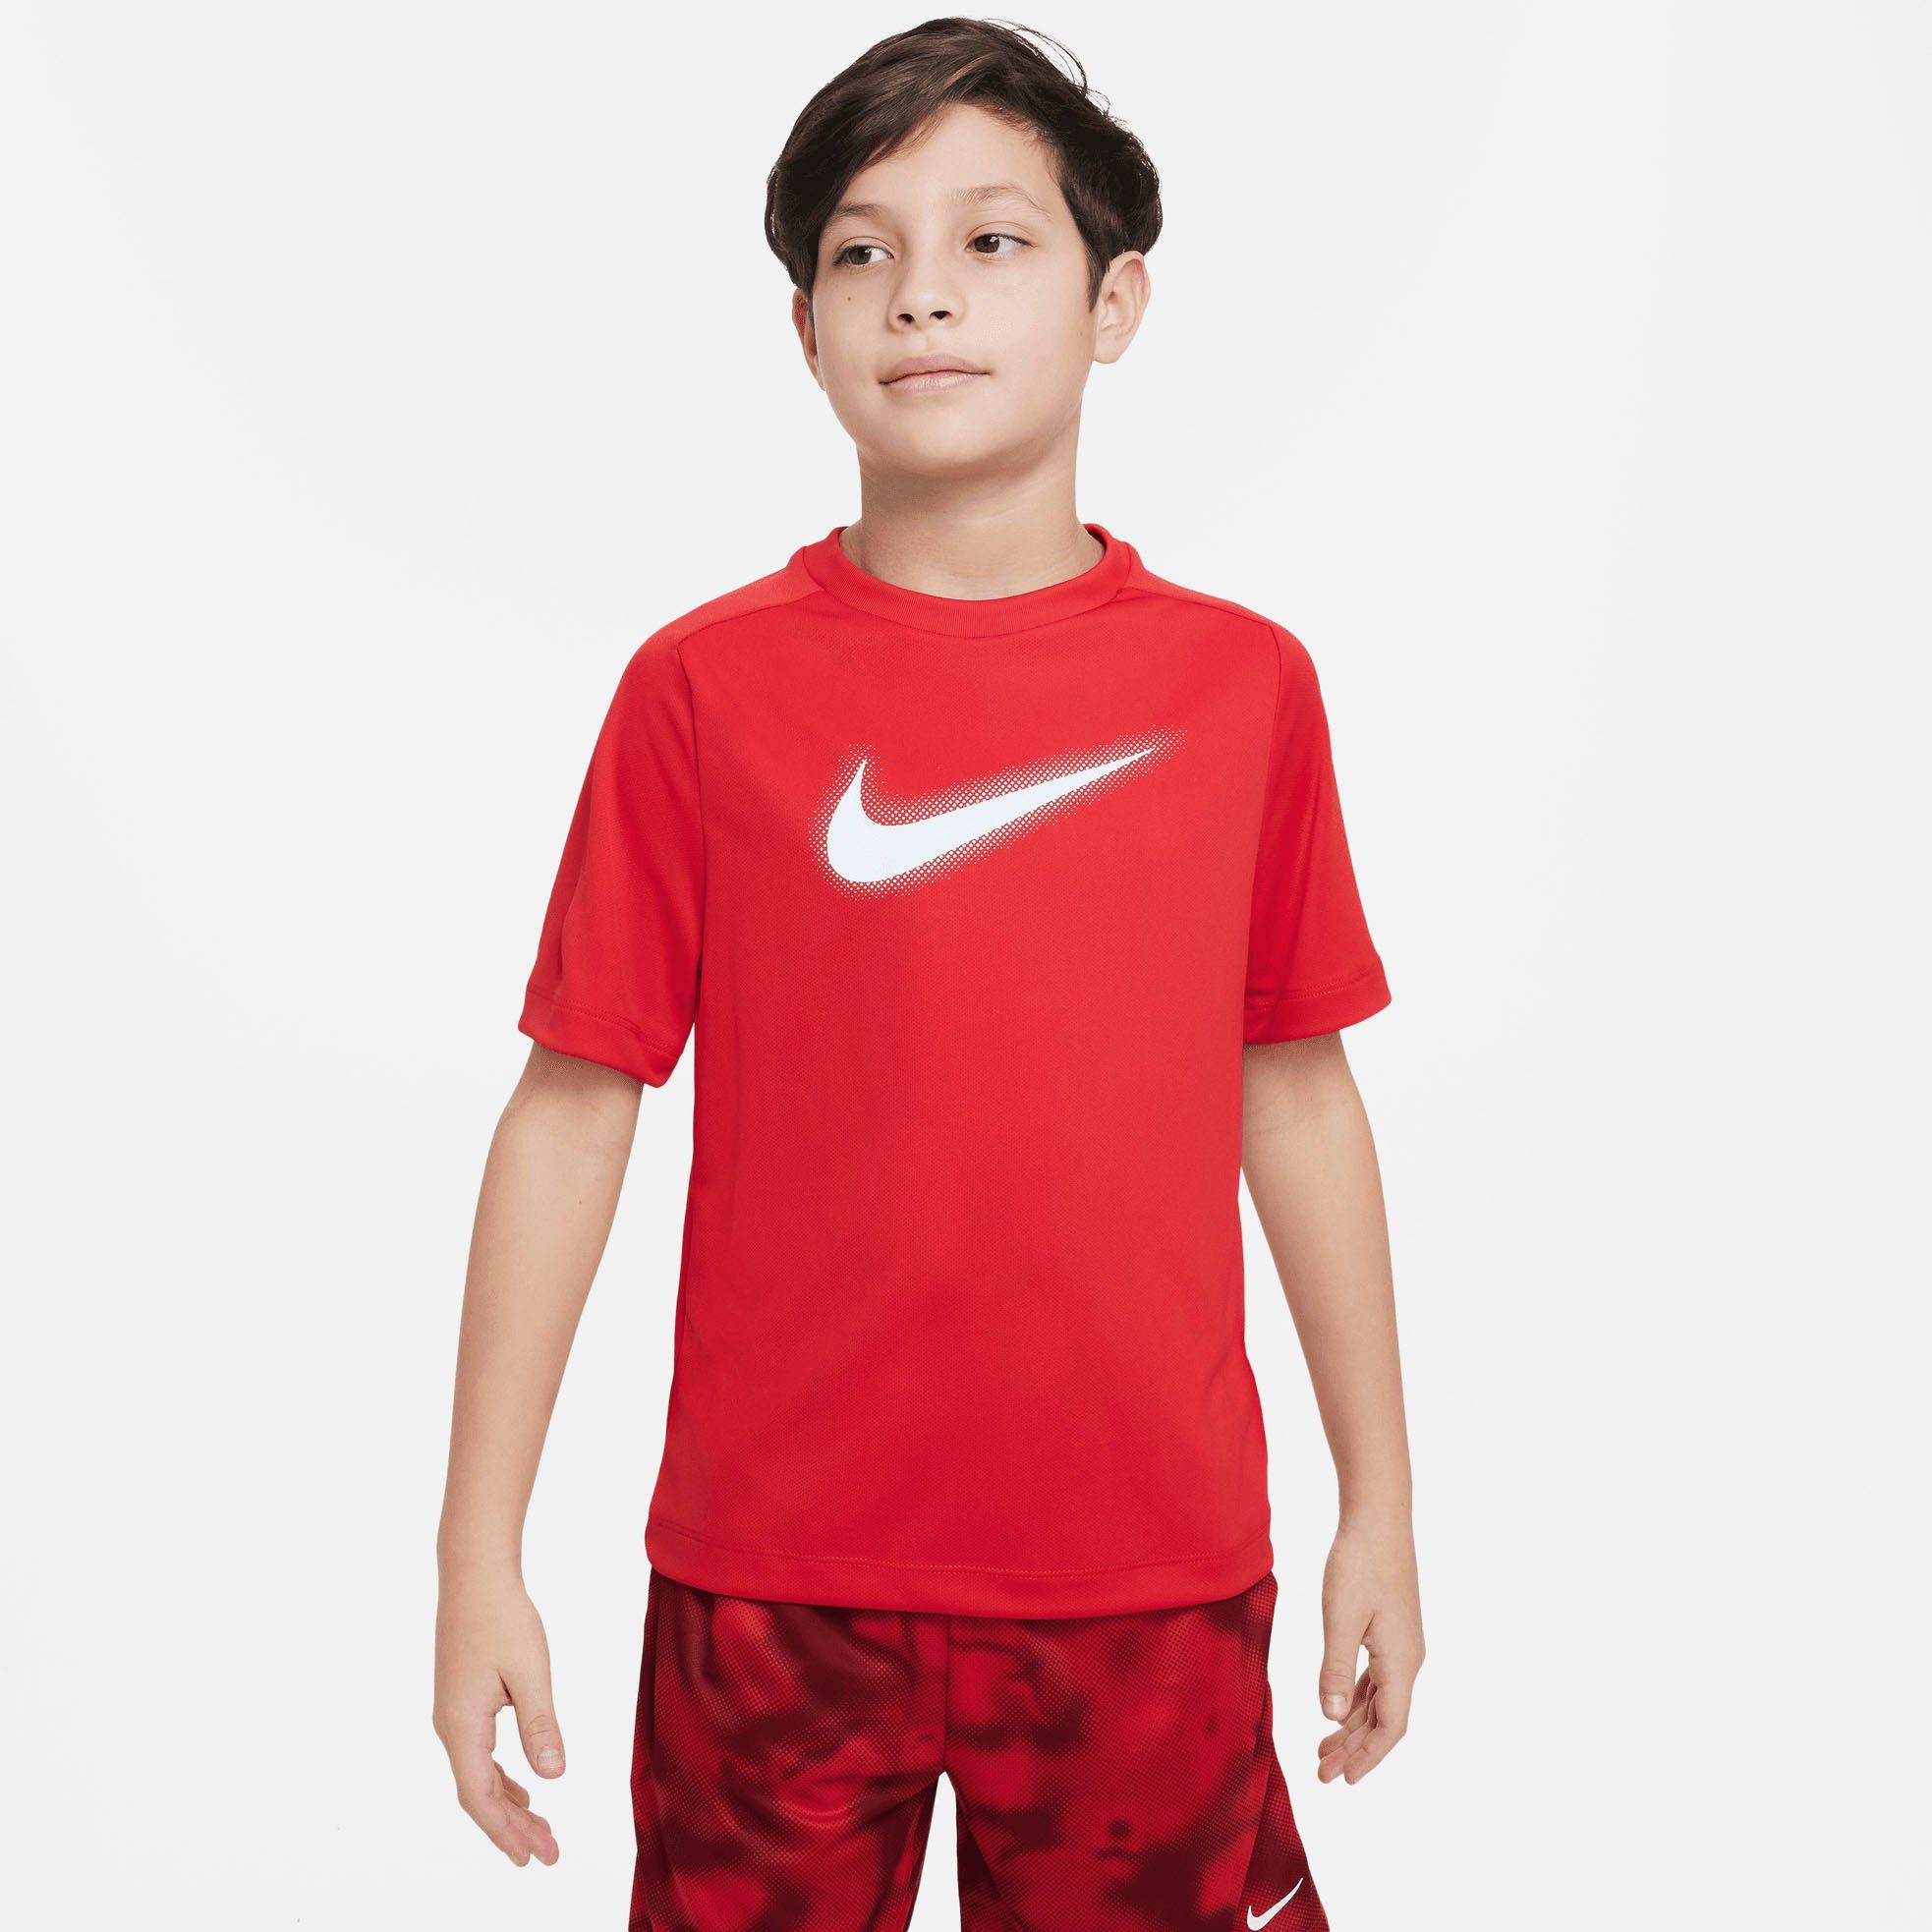 Nike Trainingsshirt KIDS' BIG DRI-FIT (BOYS) TRAINING rot GRAPHIC MULTI+ TOP